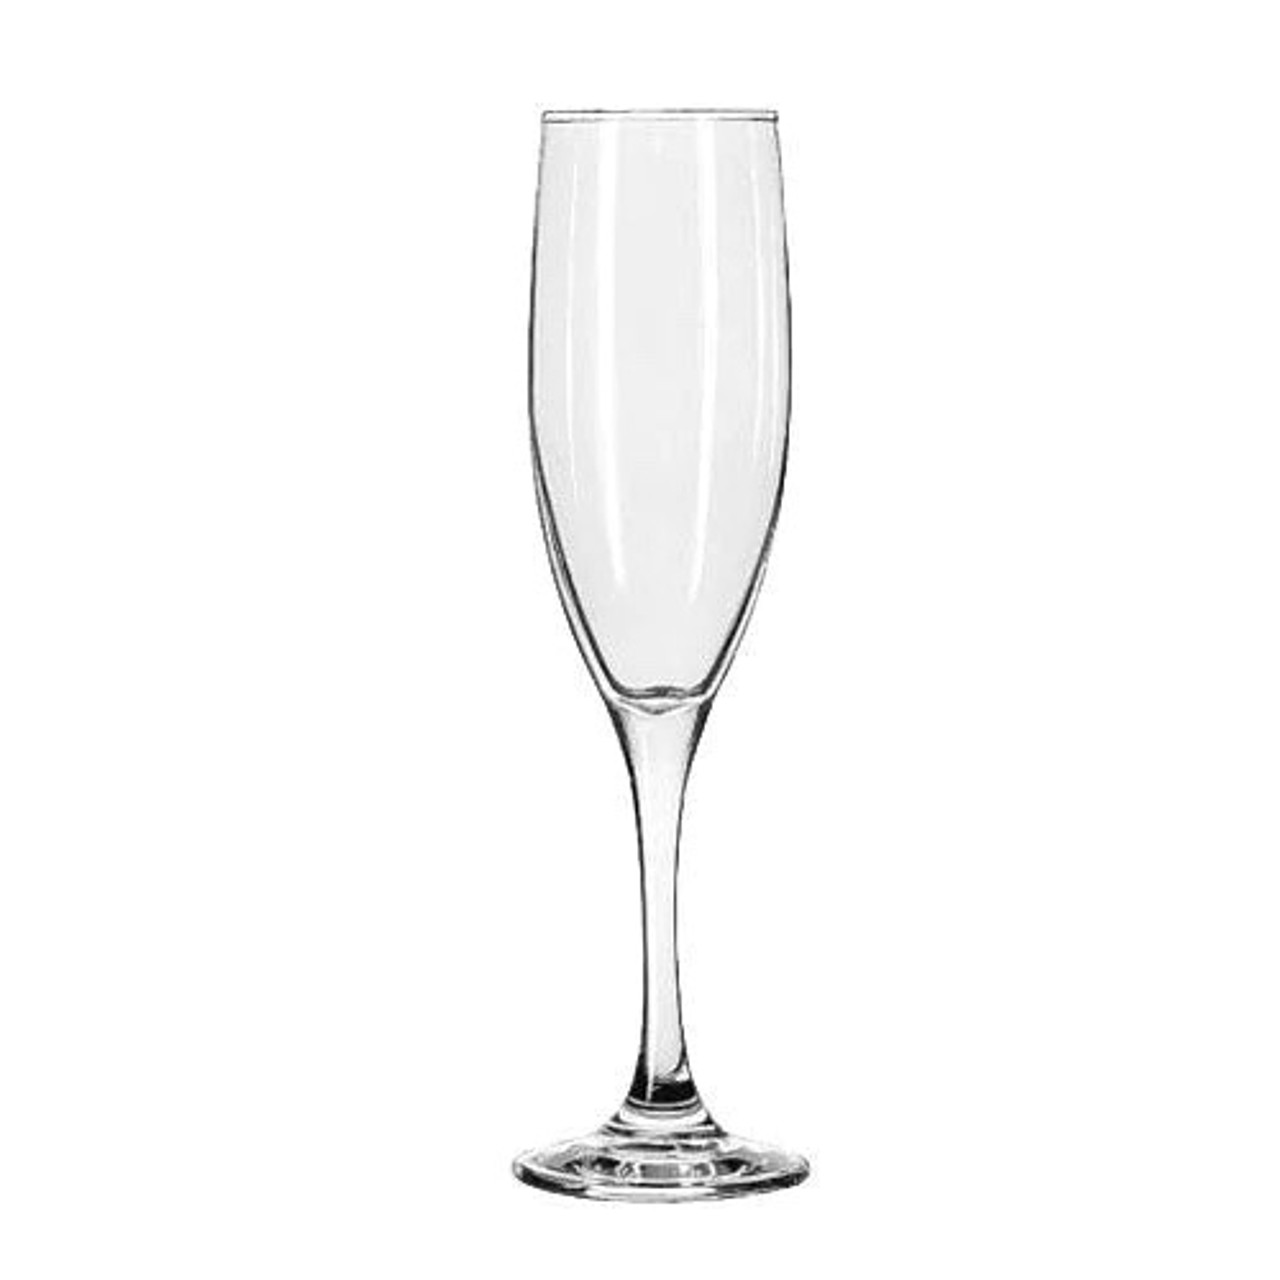 Libbey Signature Westbury Champagne Flute Glasses, Set of 4